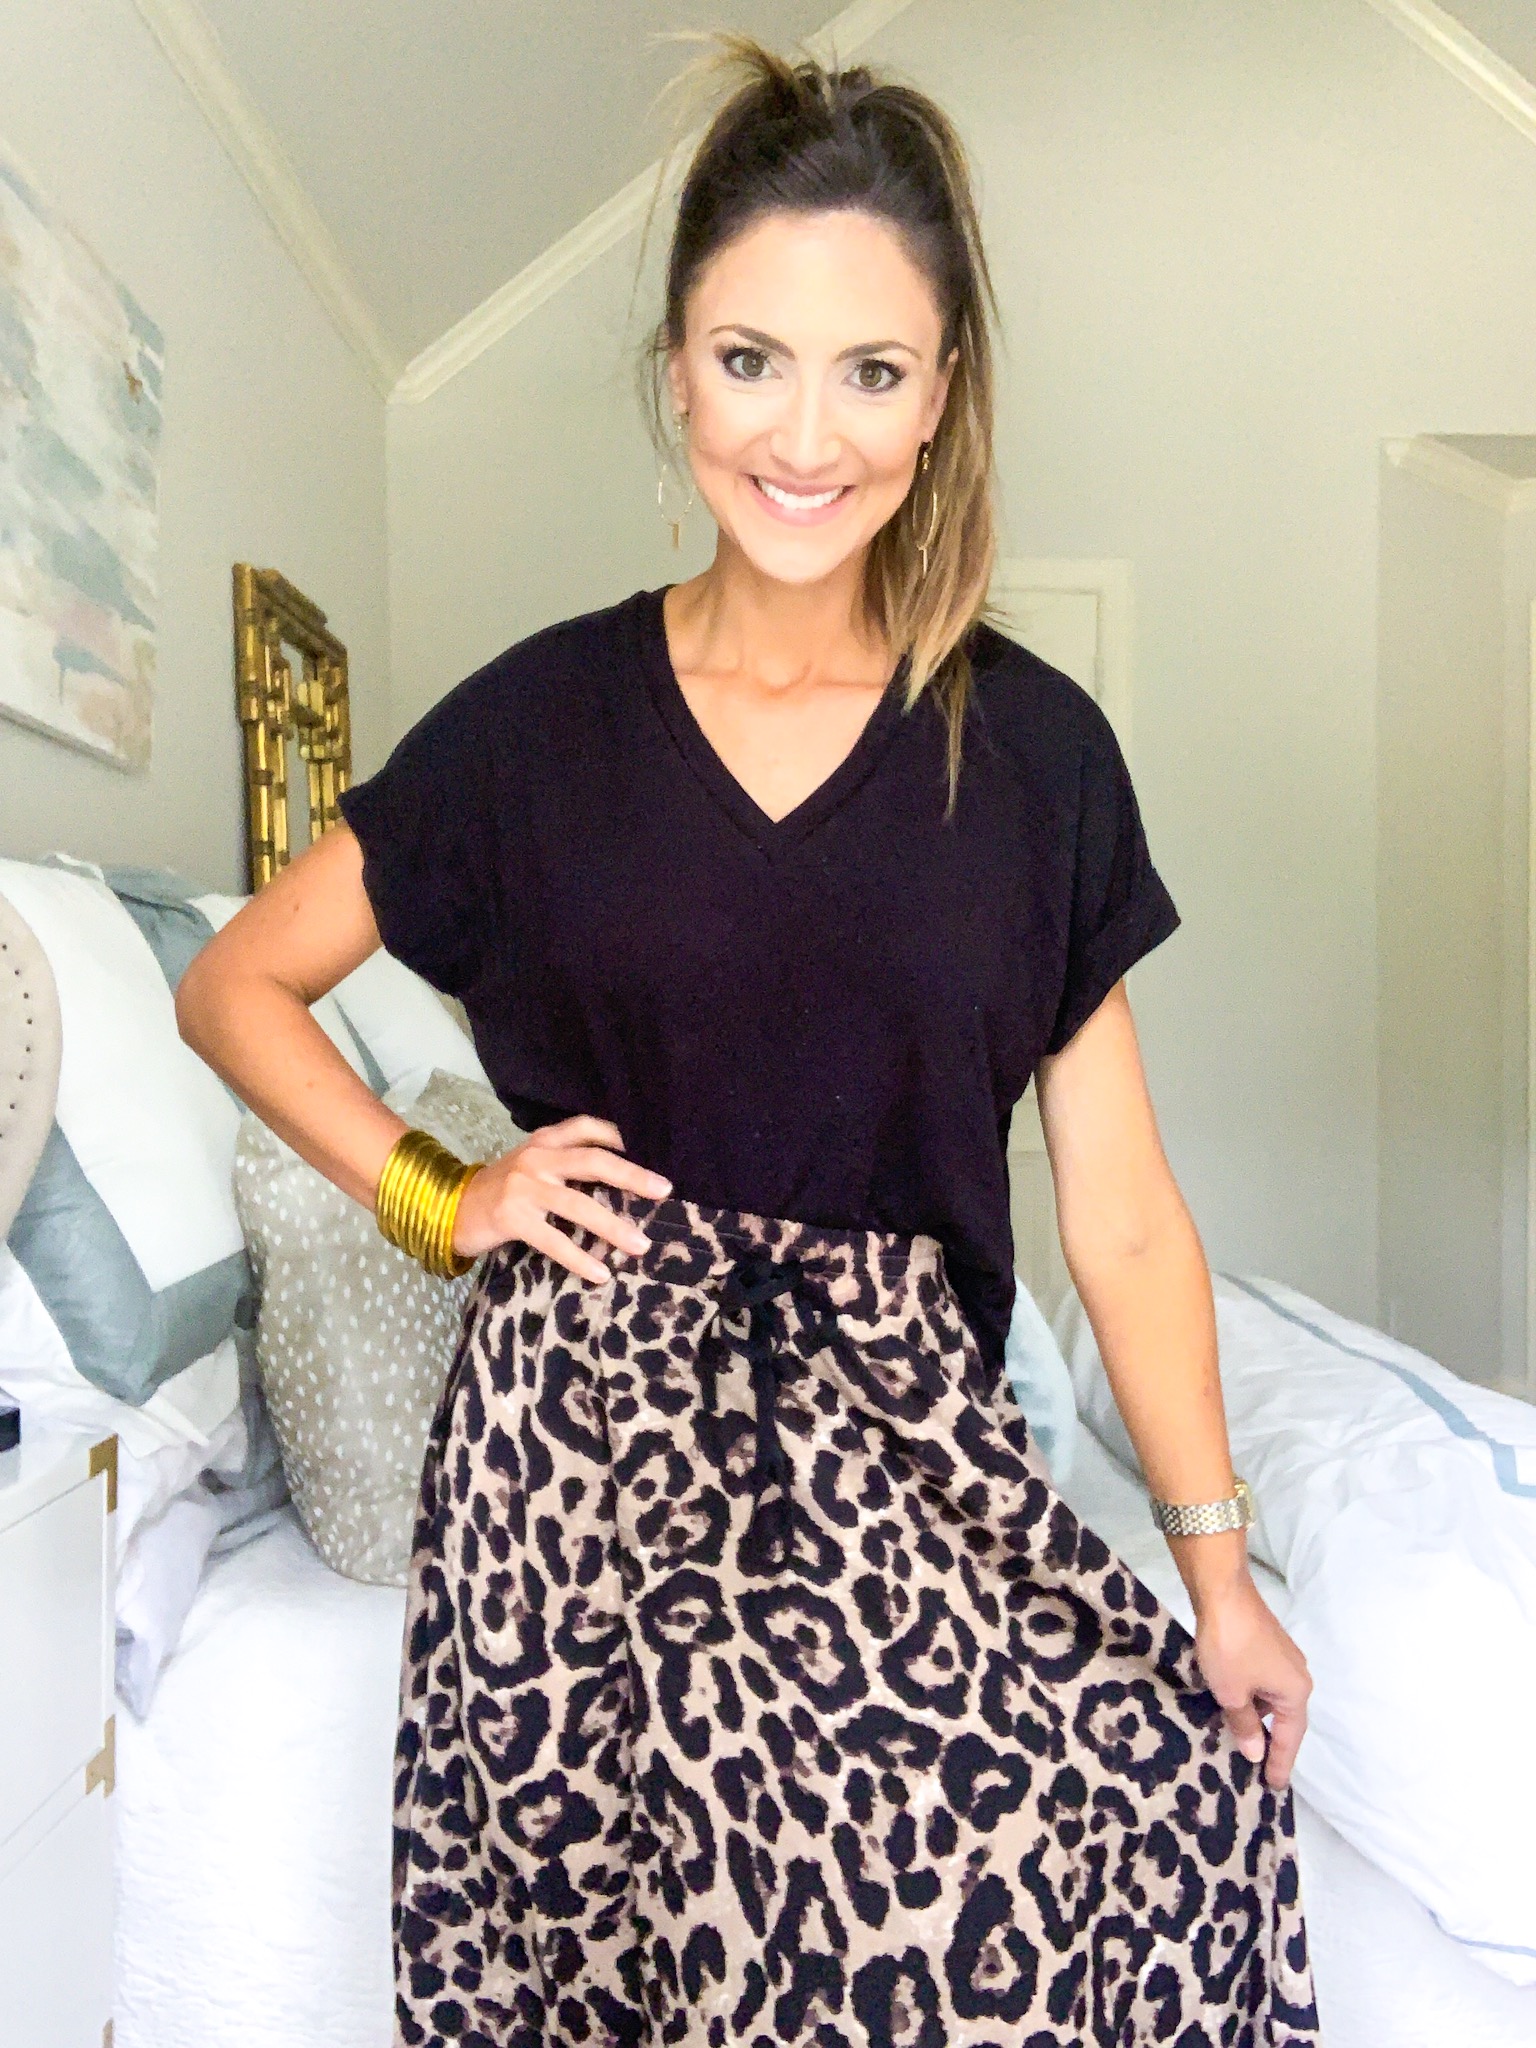 Leopard Midi Skirt | Amazon Fashion Haul | Style Your Senses